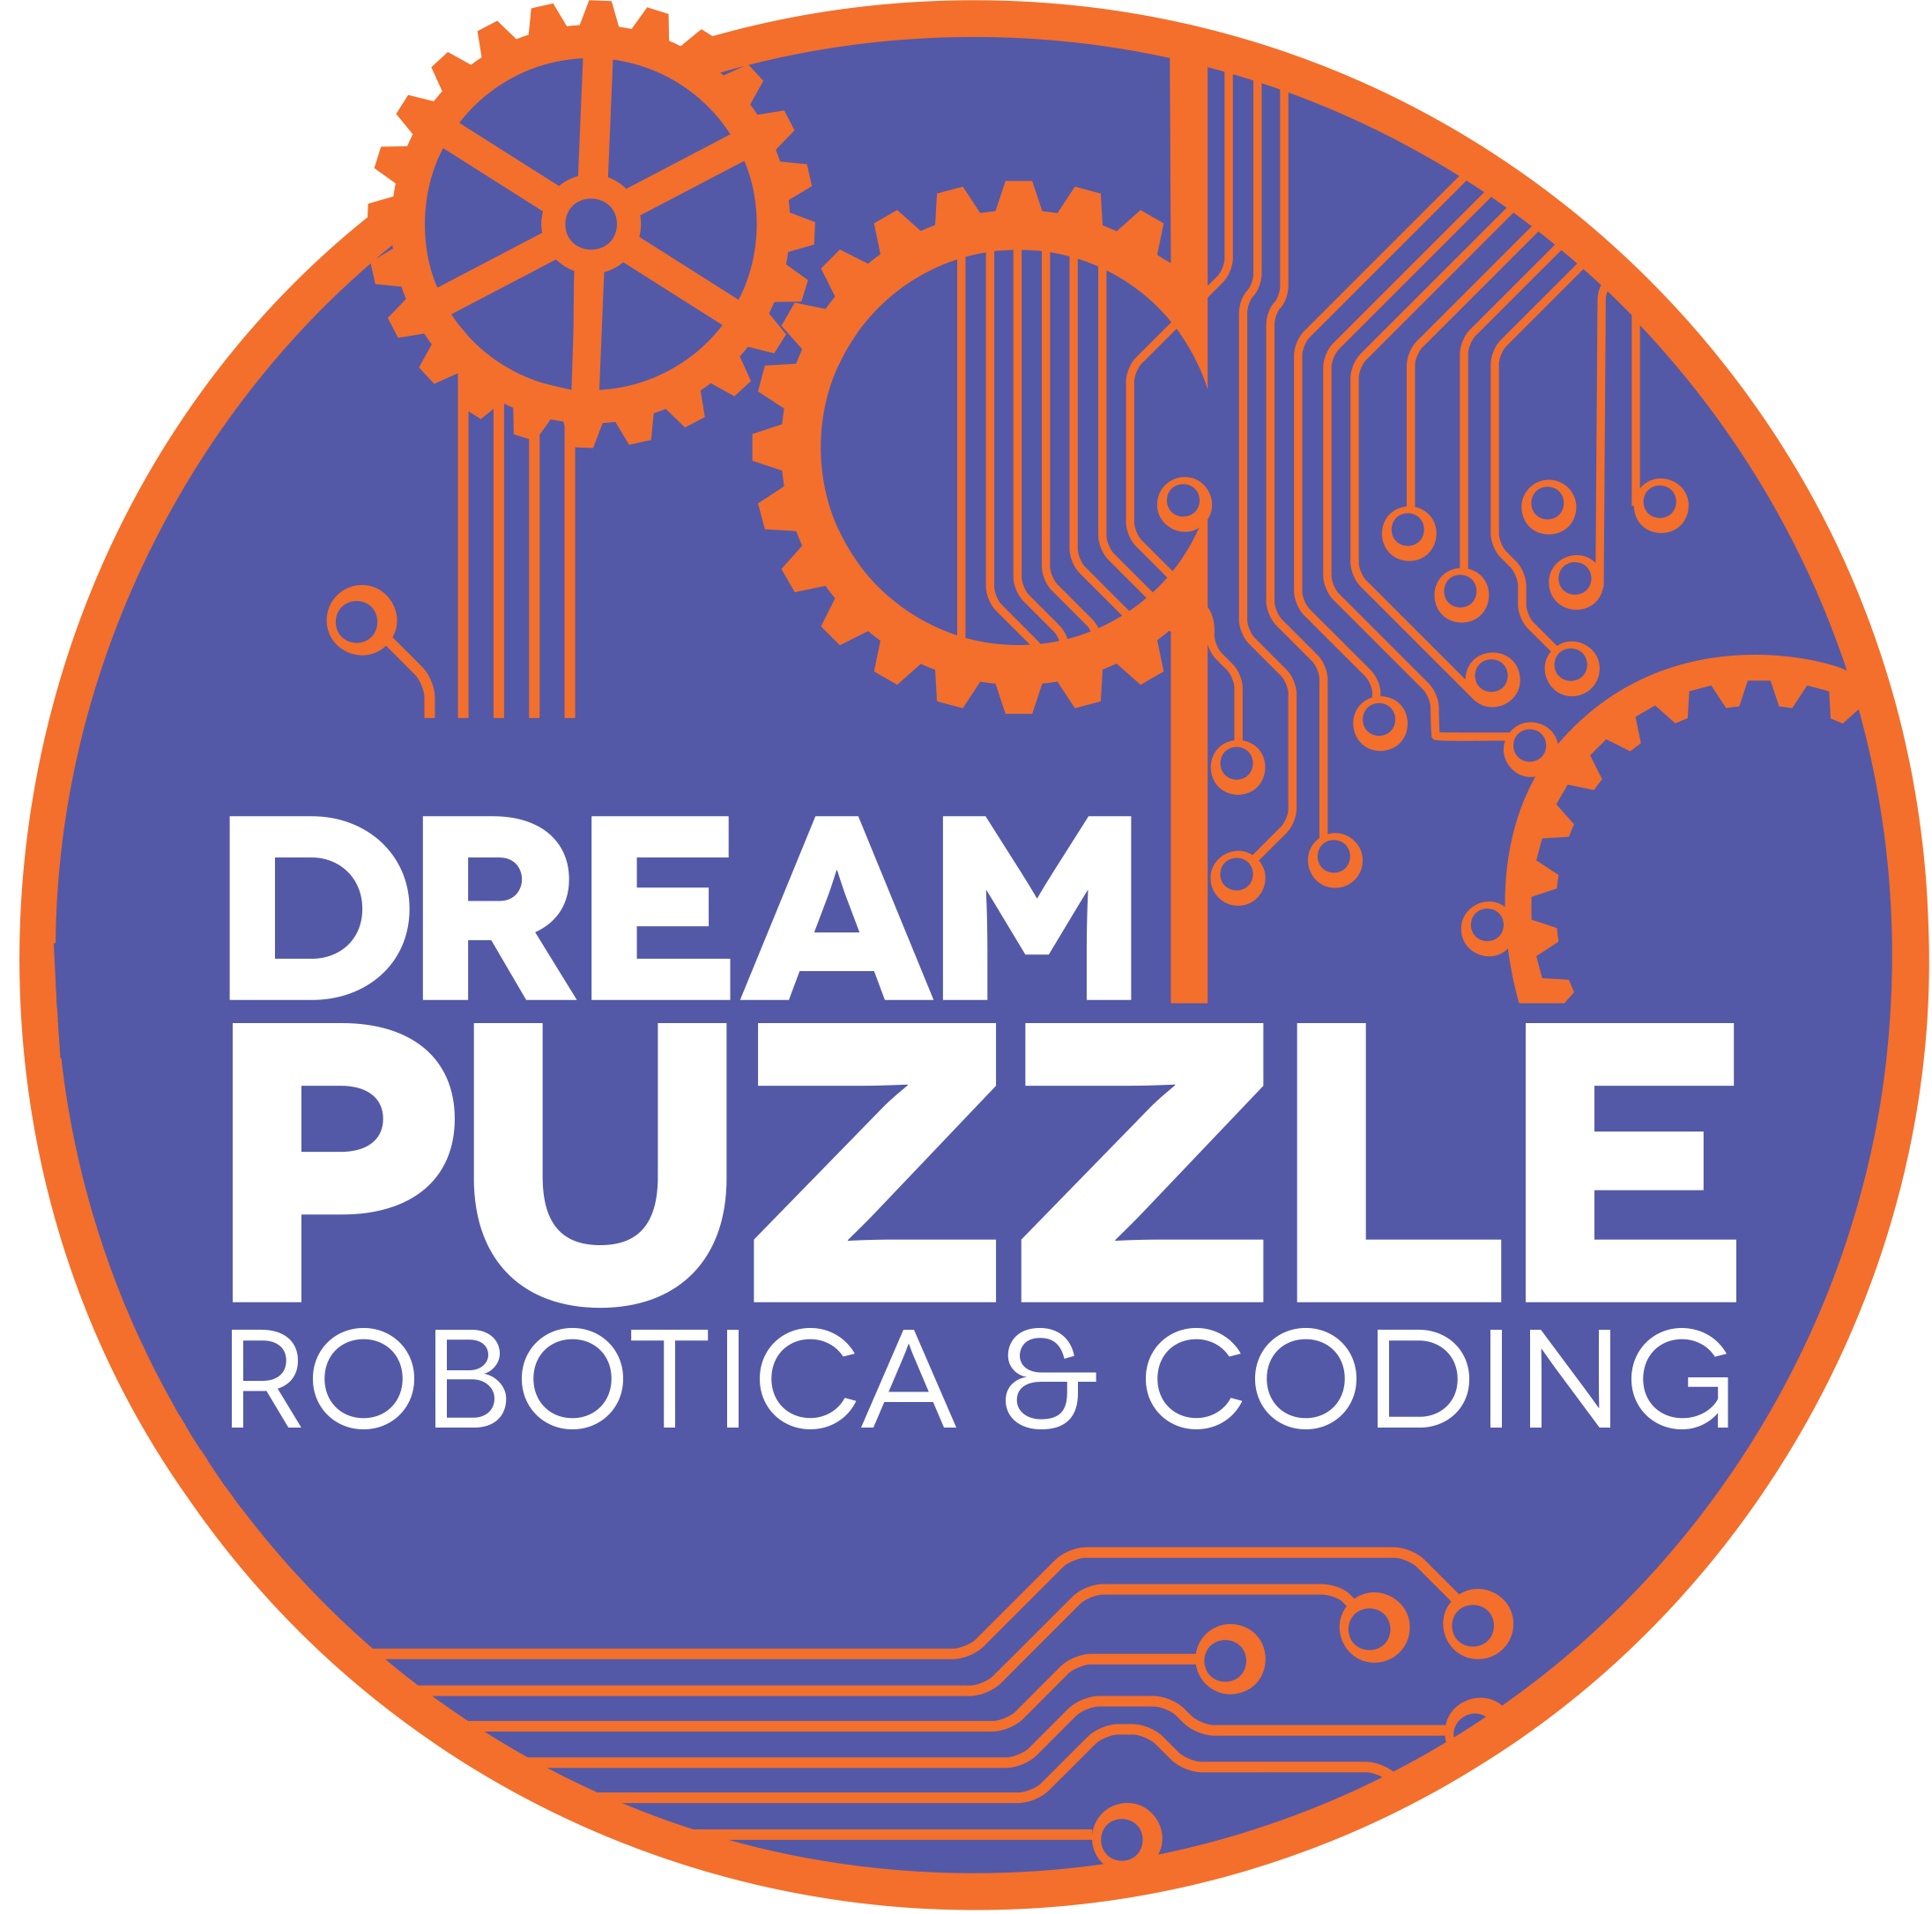 LOGO-dreampuzzle-robotica-coding